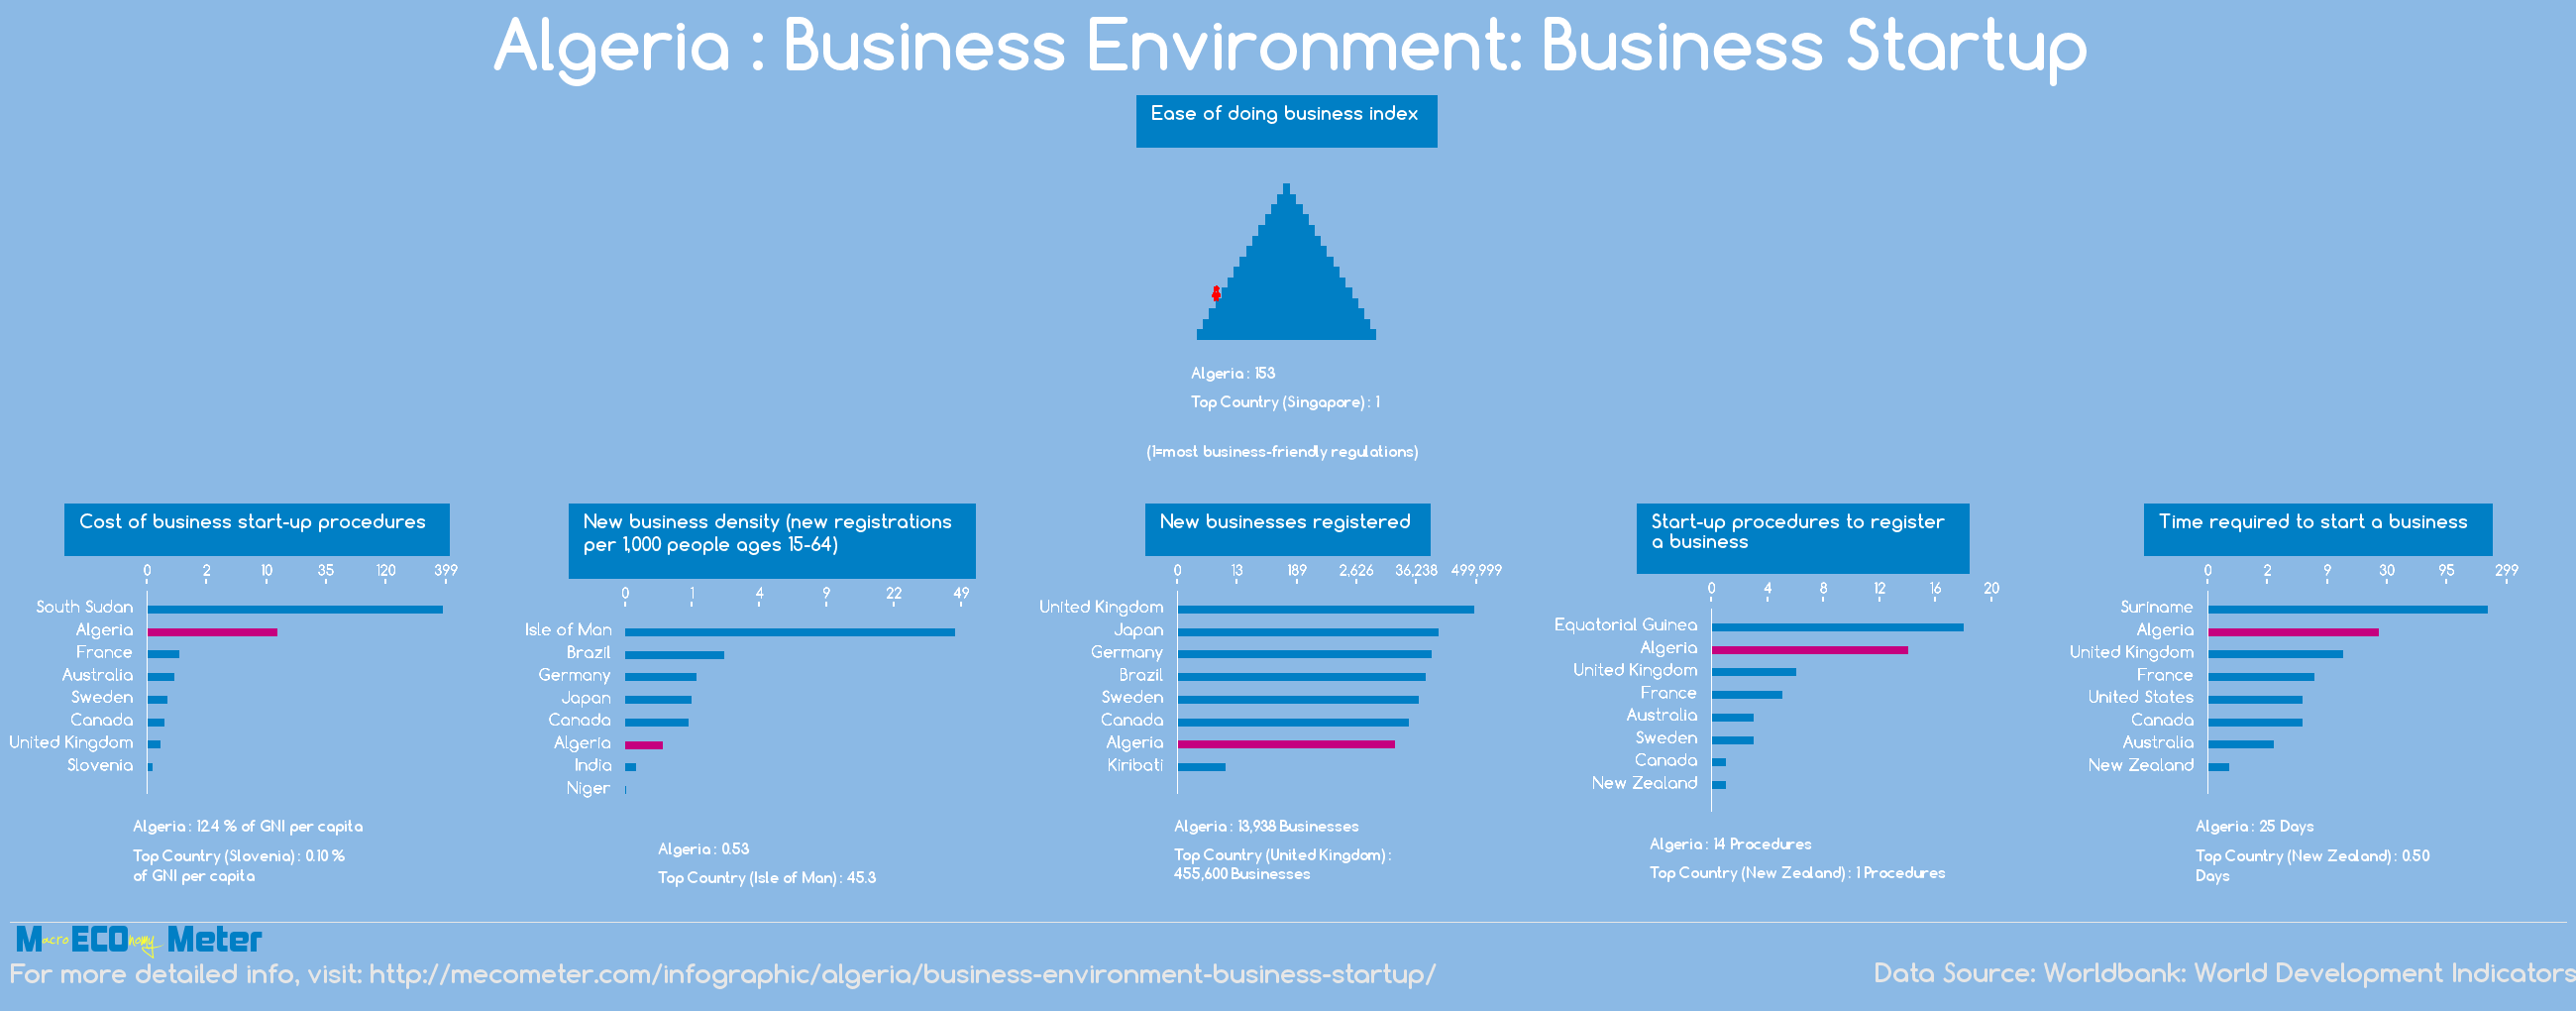 Algeria : Business Environment: Business Startup